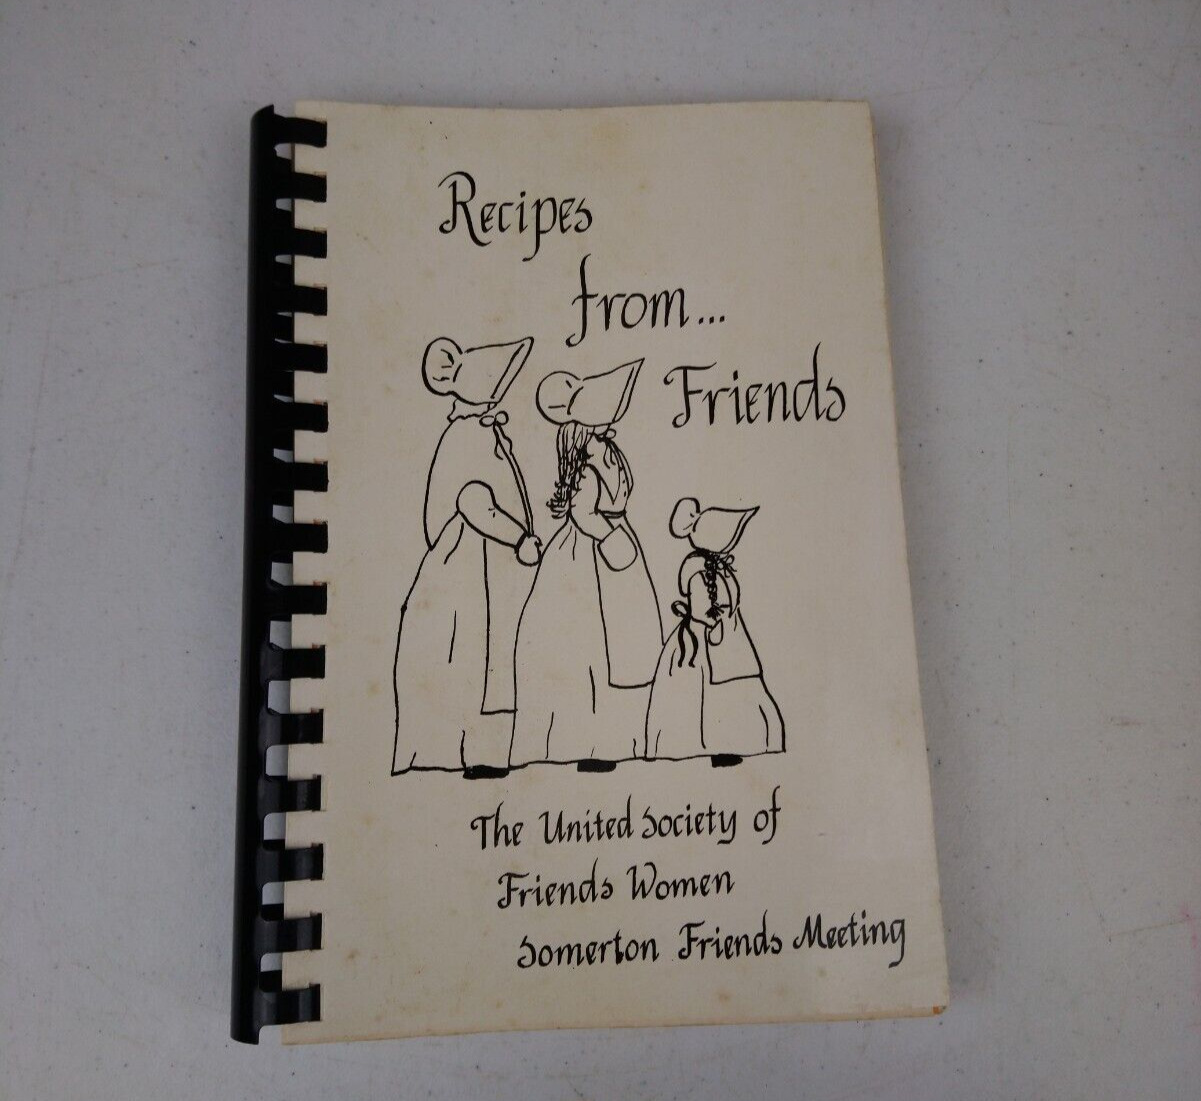 VTG Recipes From Friends United Society of Friends Somerton VA Meeting Cookbook